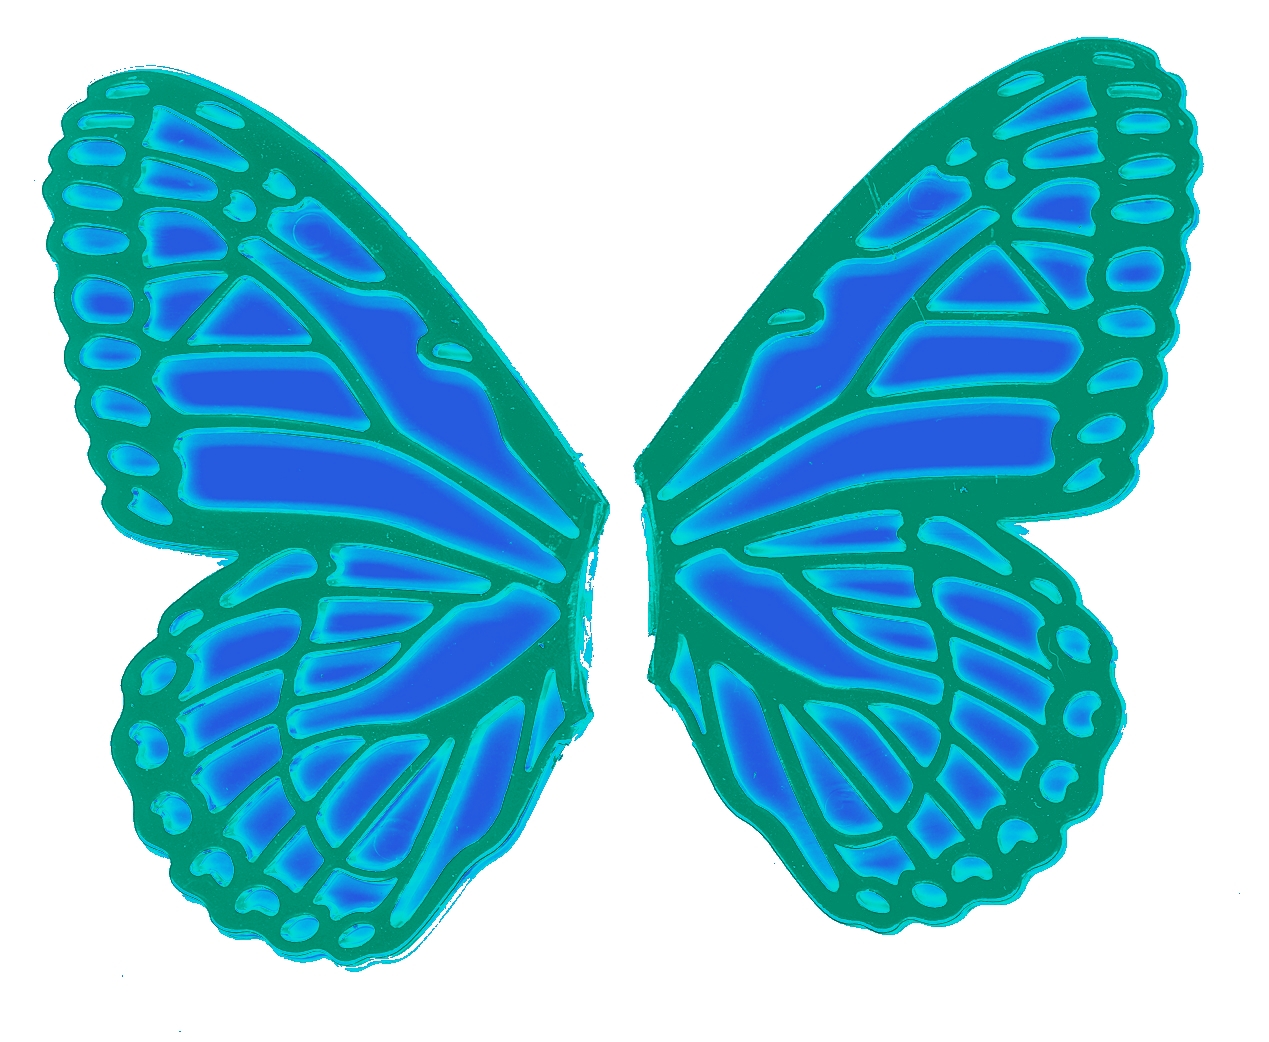 Butterfly Wings Clipart.